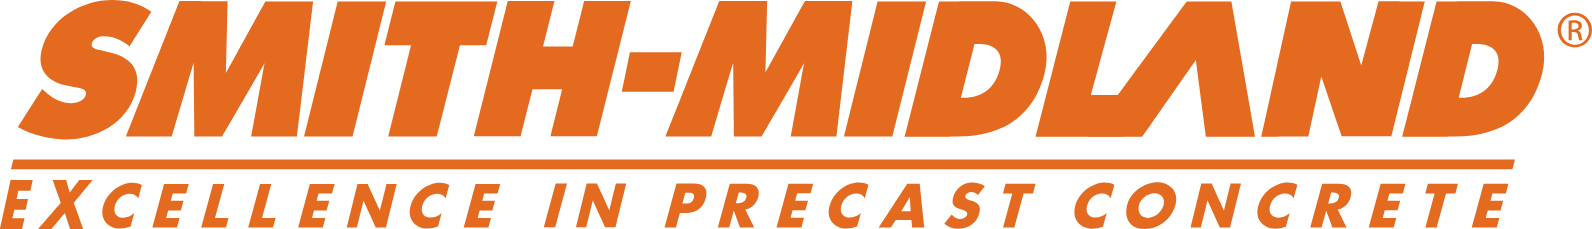 Smith-Midland logo large (transparent PNG)